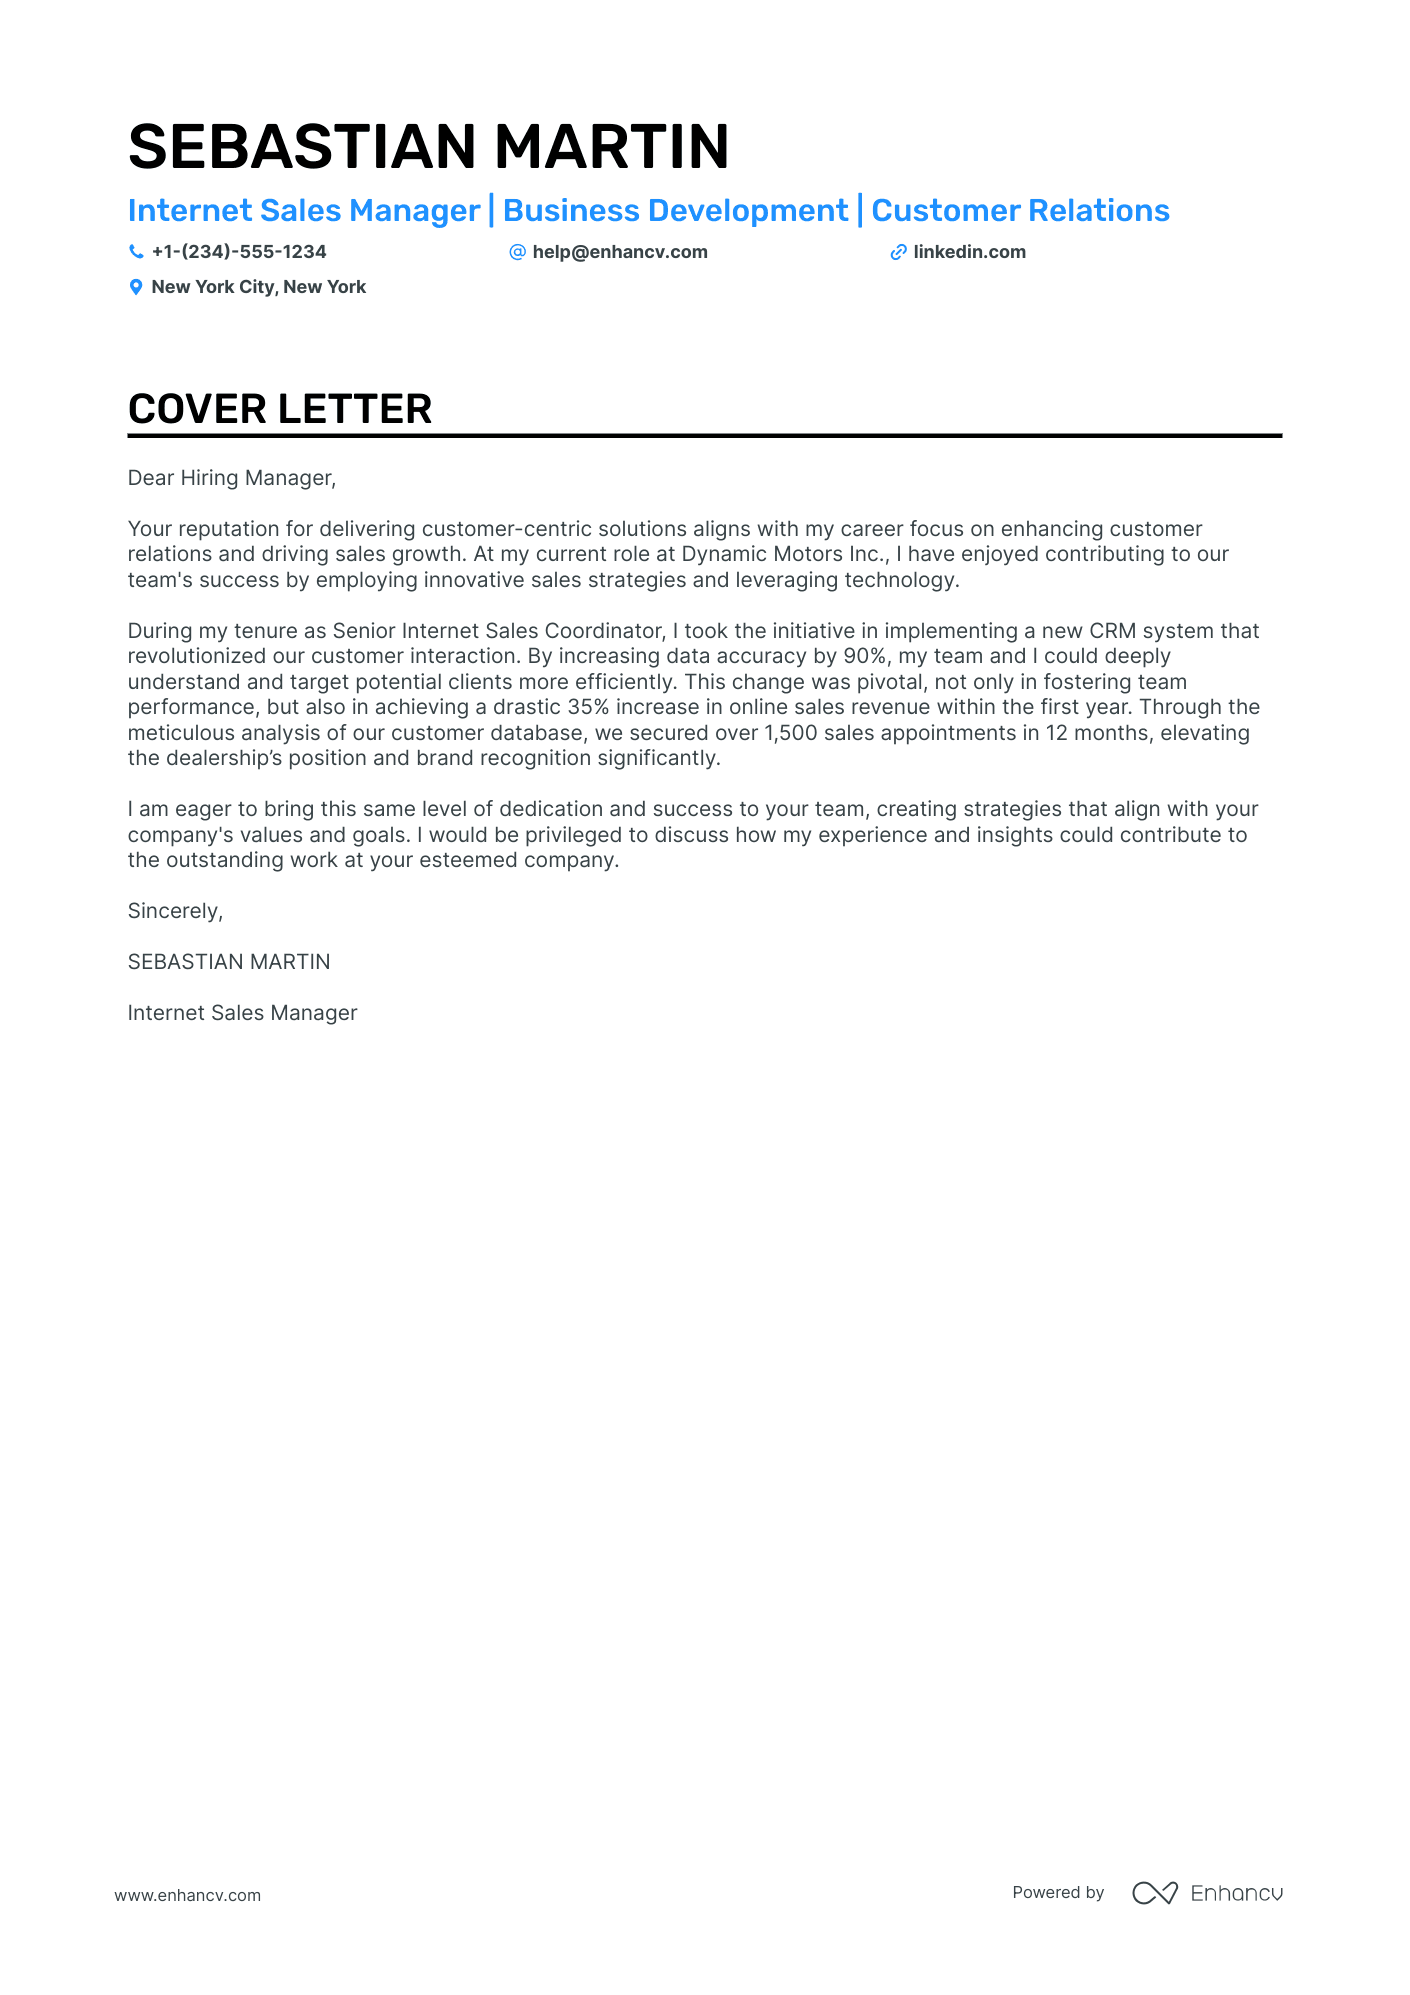 Internet Sales Manager cover letter